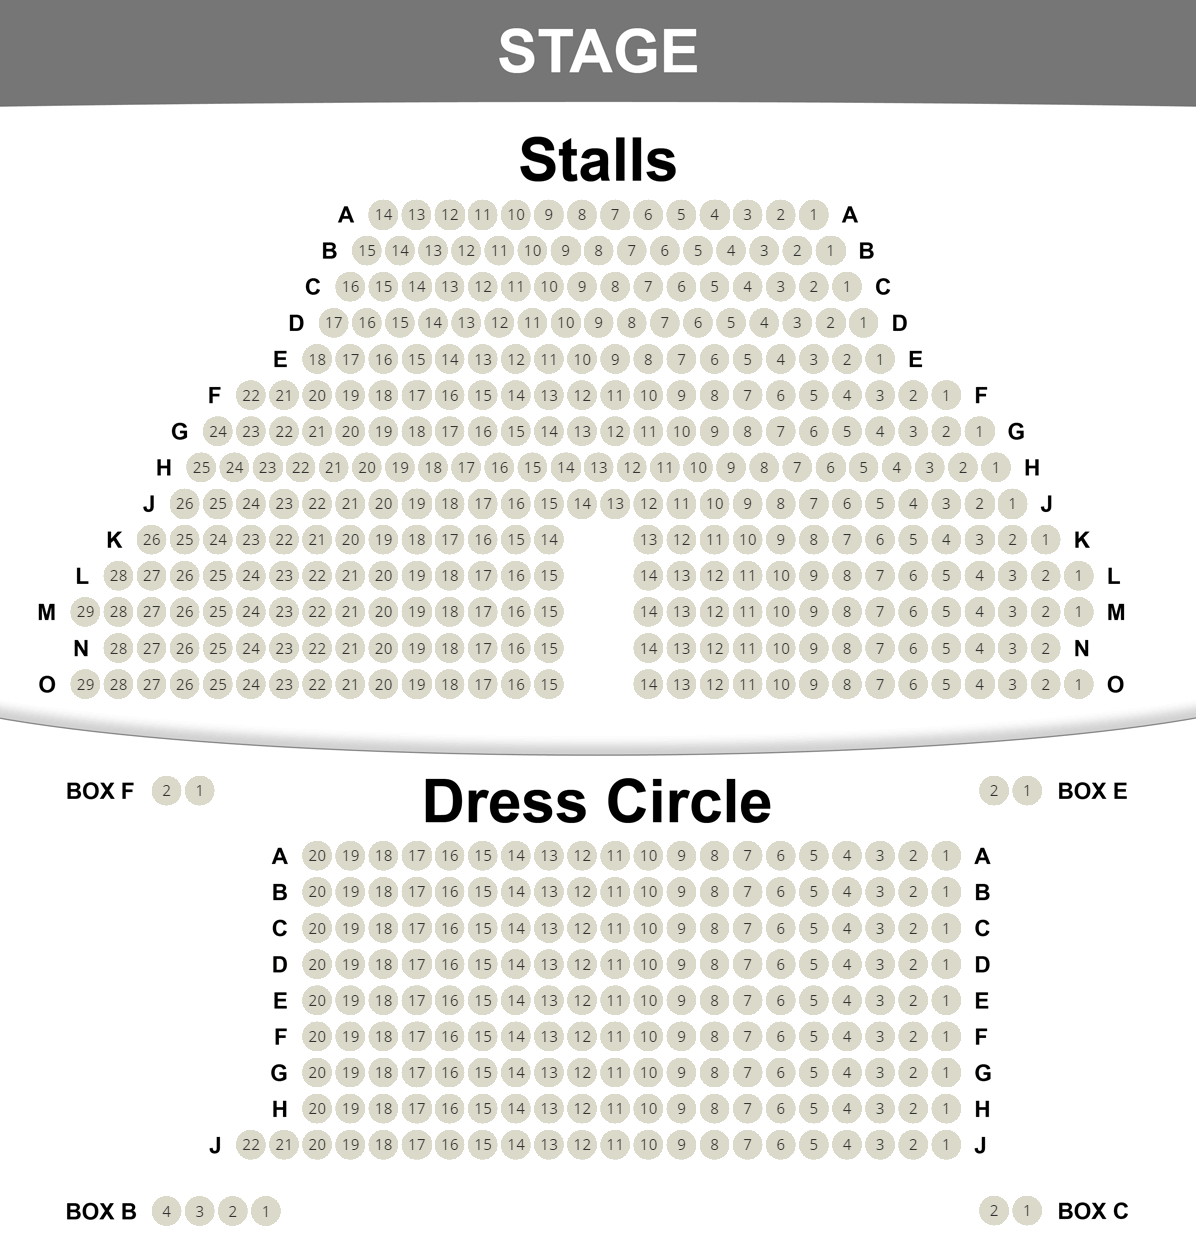 Duchess Theatre seating plan